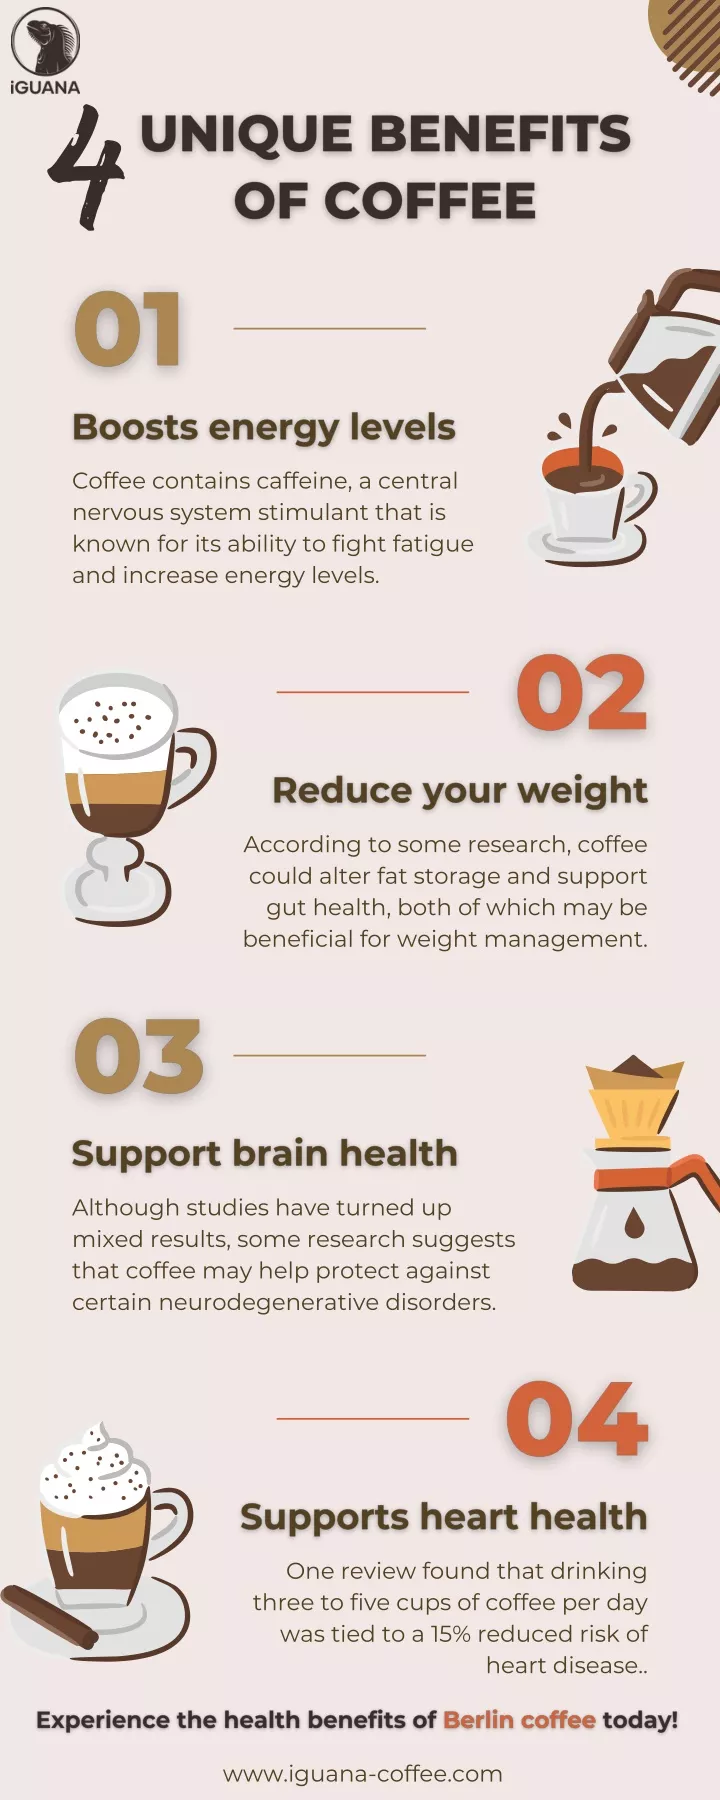 coffee contains caffeine a central nervous system